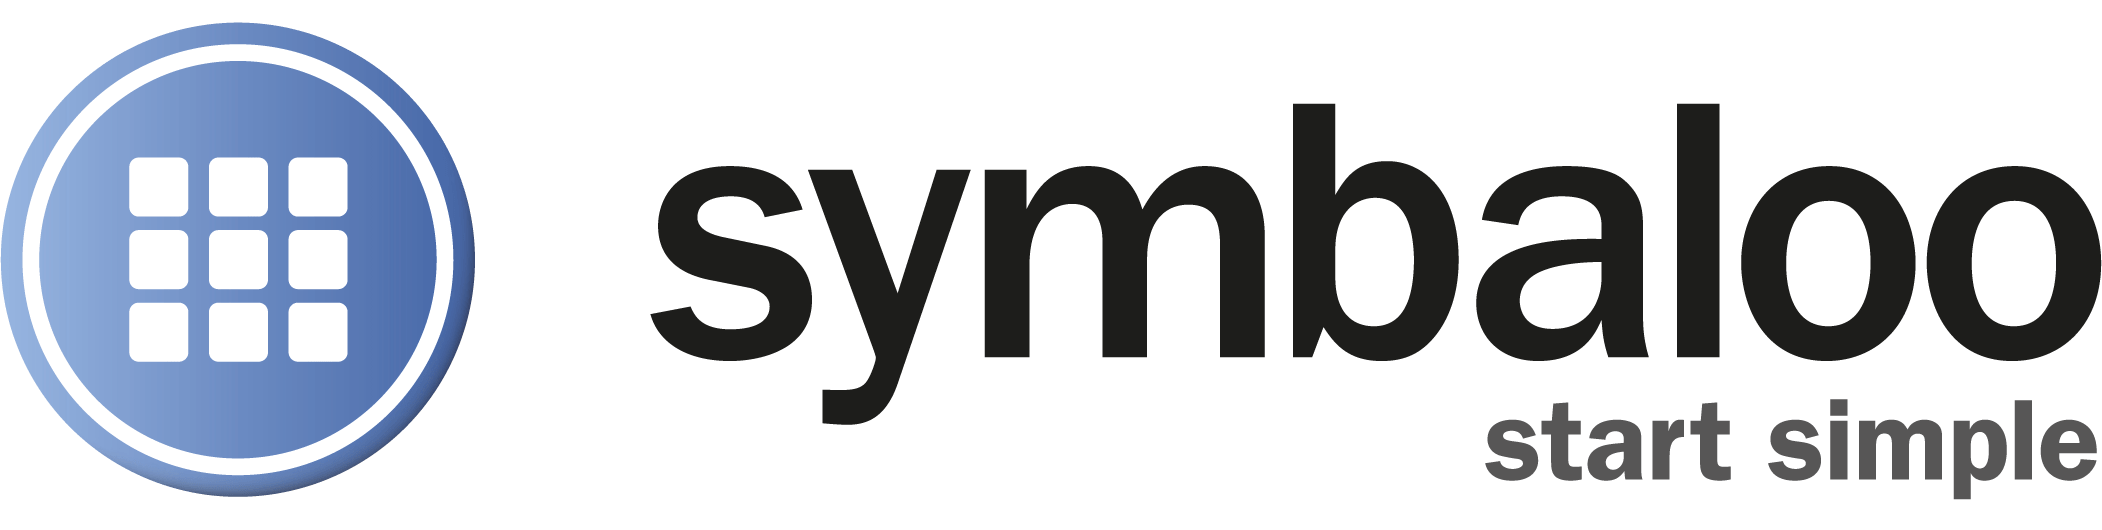 Symbaloo Logo - Tools For Curating the Web: Symbaloo